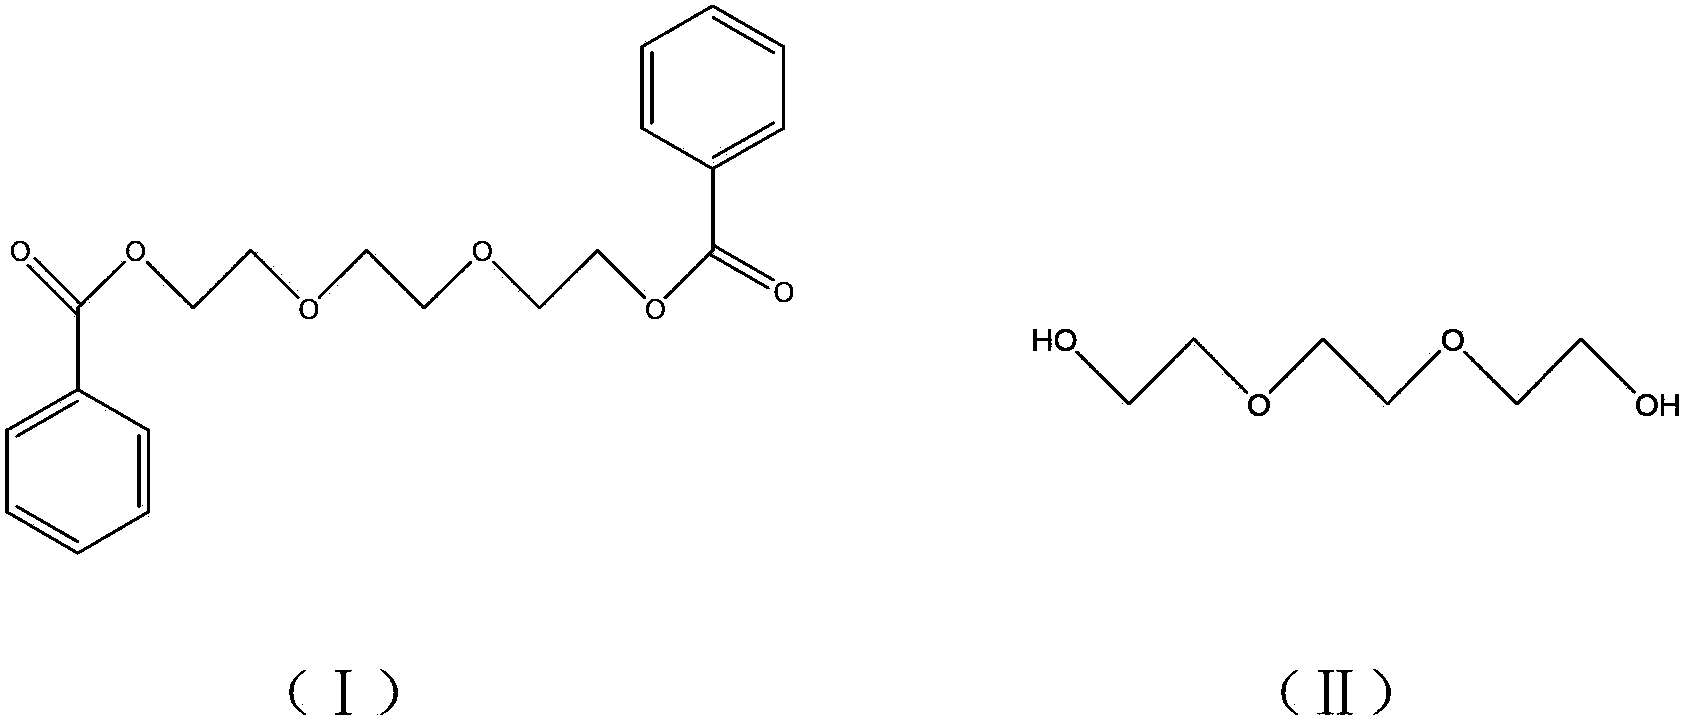 Preparation method of triethylene glycol dibenzoate